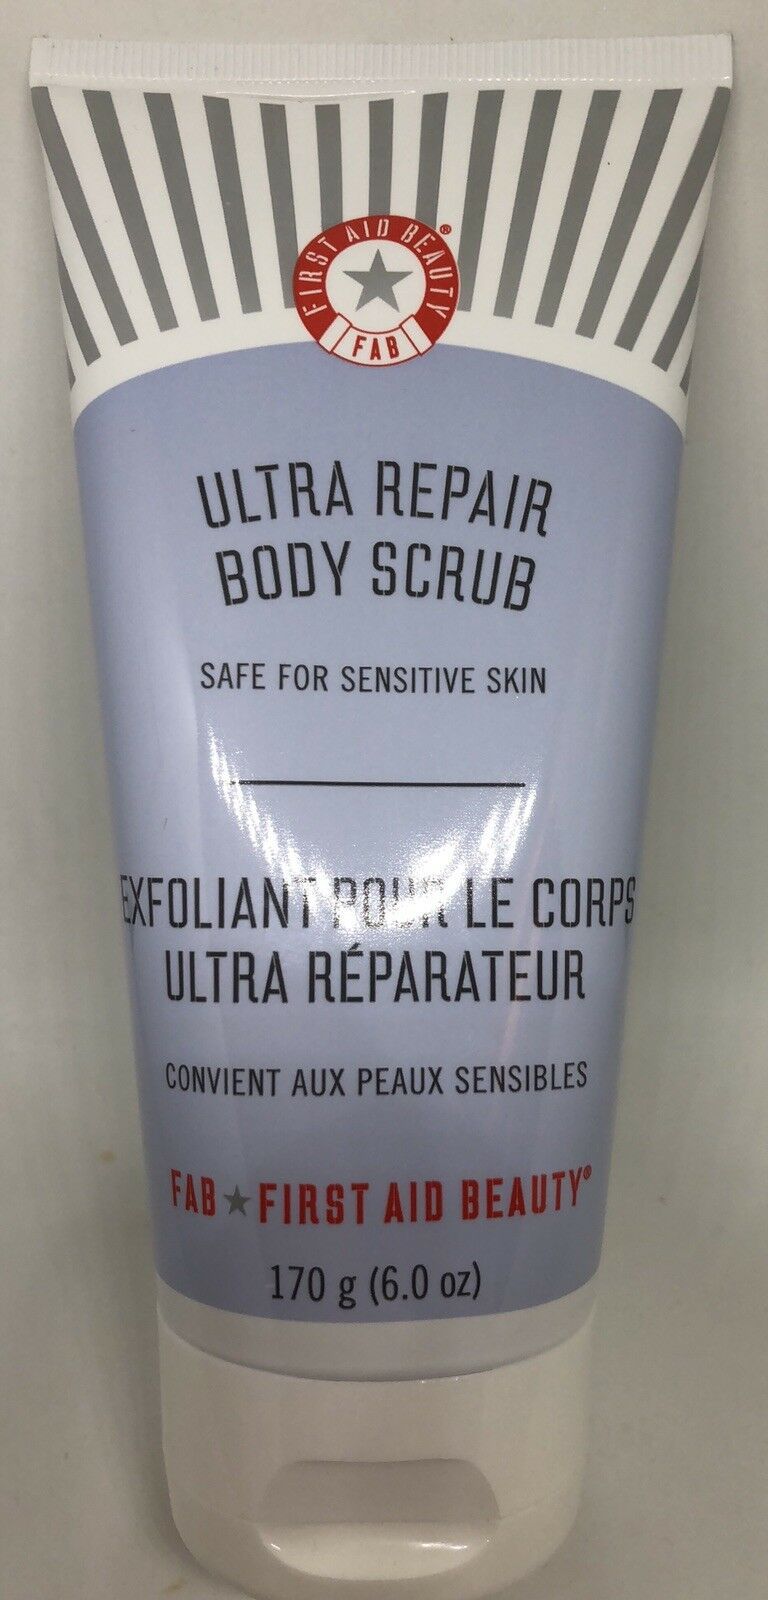 First Aid Beauty Ultra Repair Body Scrub Full Size Tube - $26.58